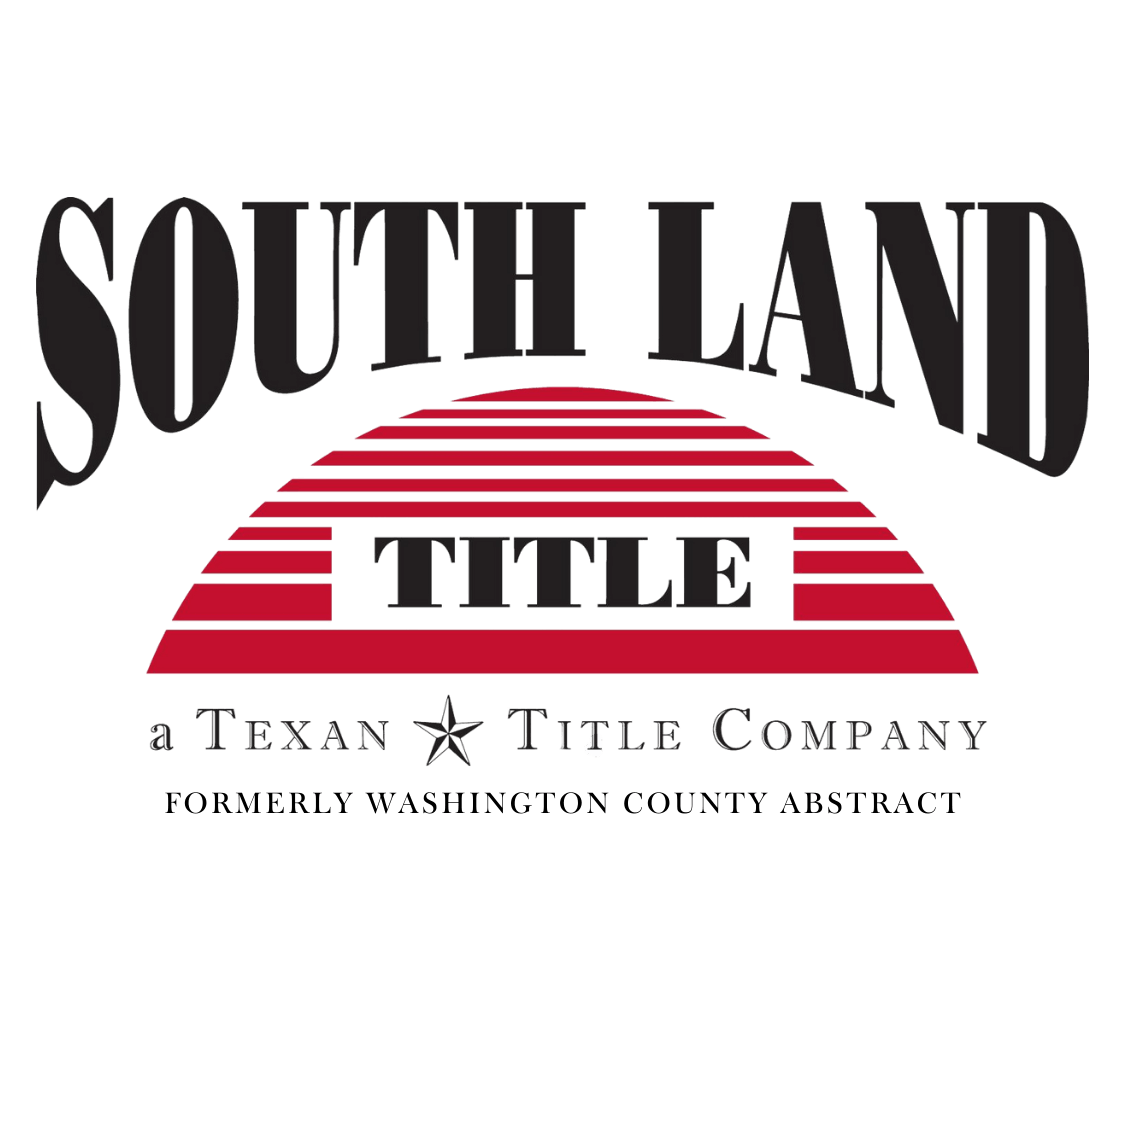 South Land Title